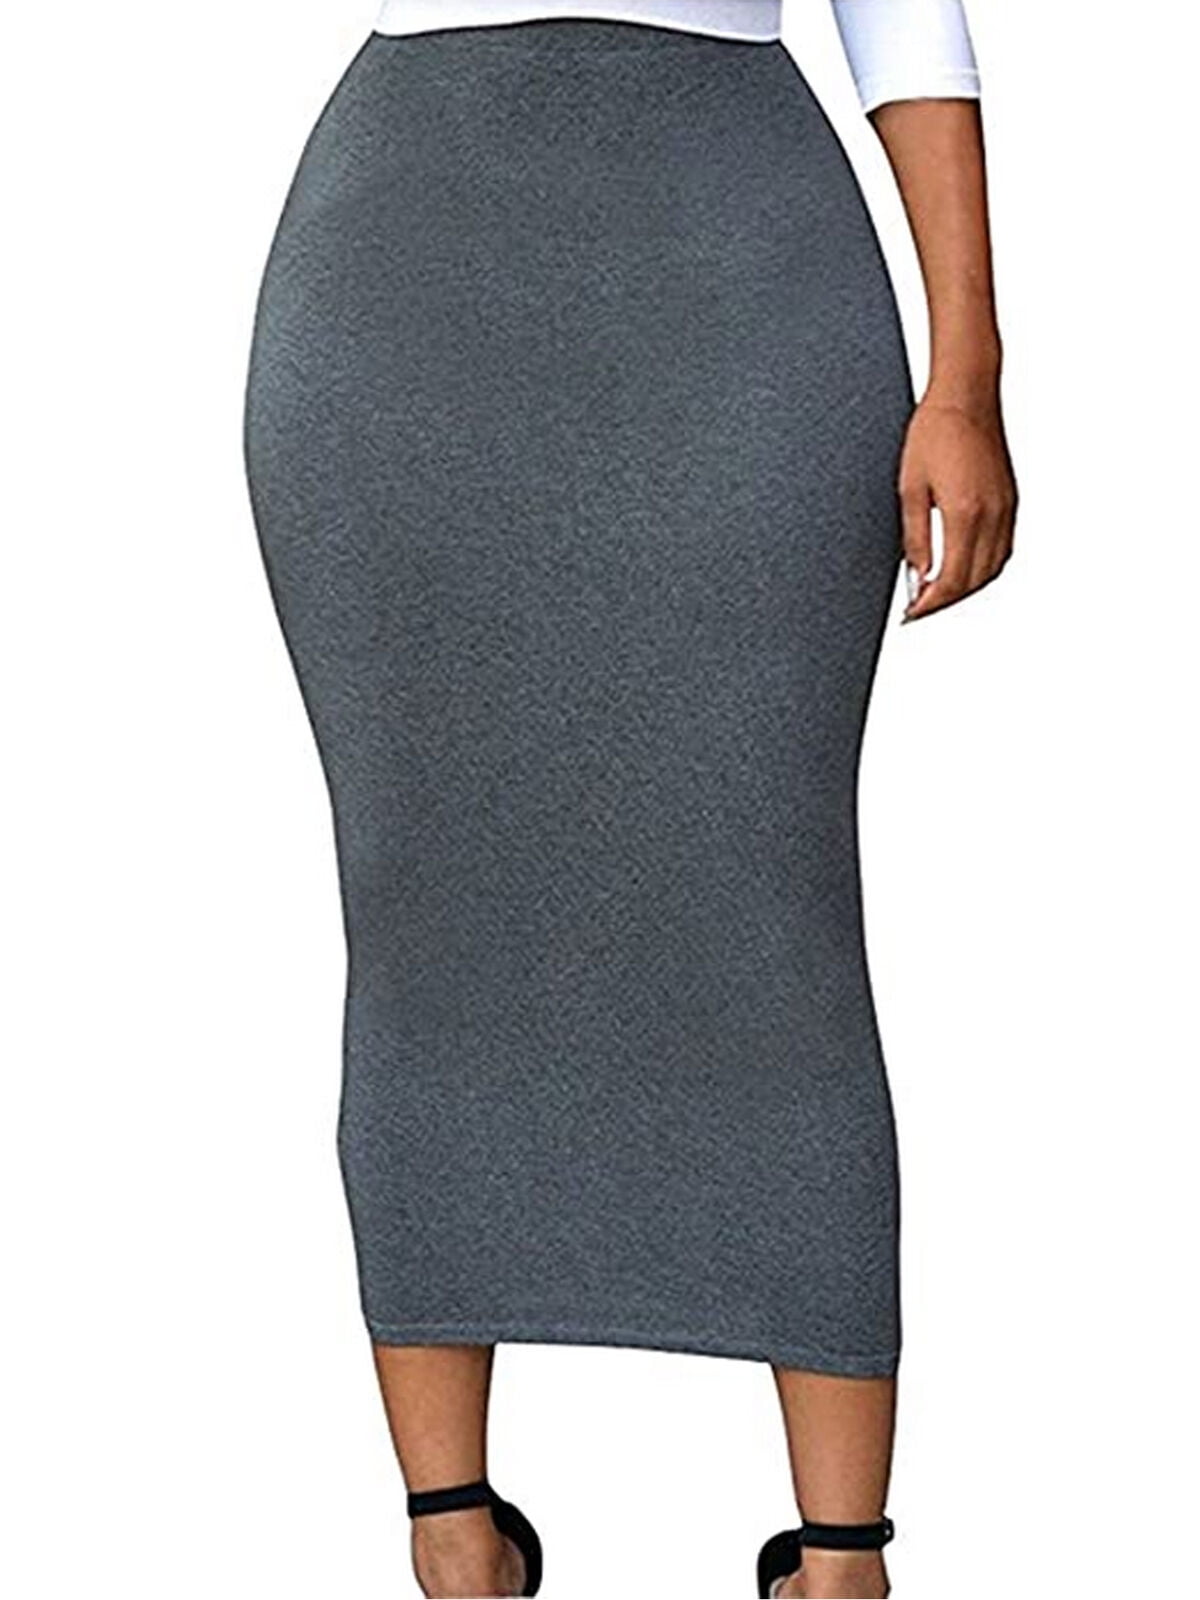 Pencil skirt high waist midi knee length straight career cotton stretch S-M-L-XL 